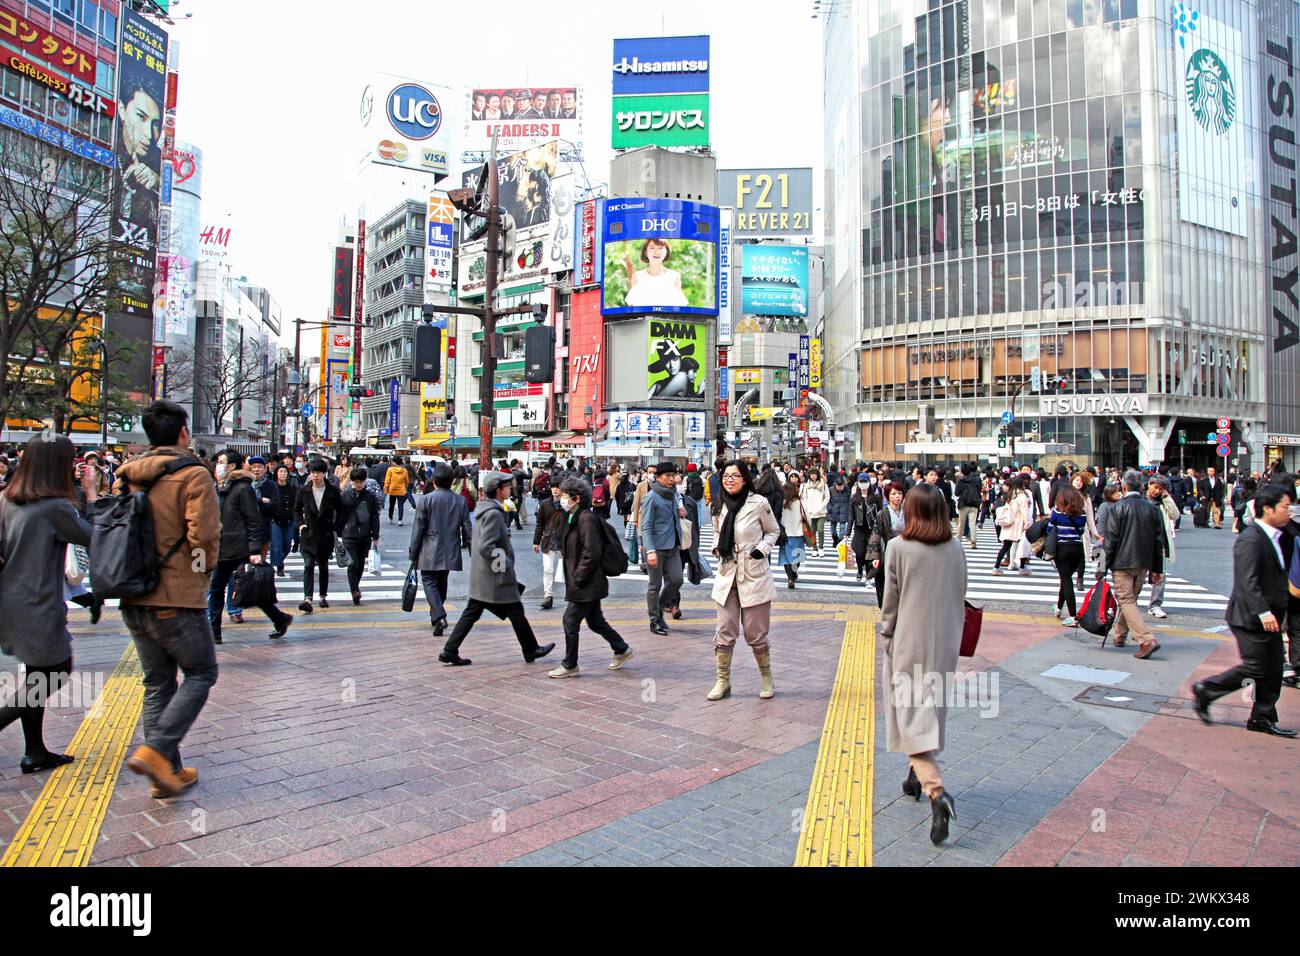 The Shibuya Intersection or Shibuya Crossing in Tokyo, Japan. Stock Photo